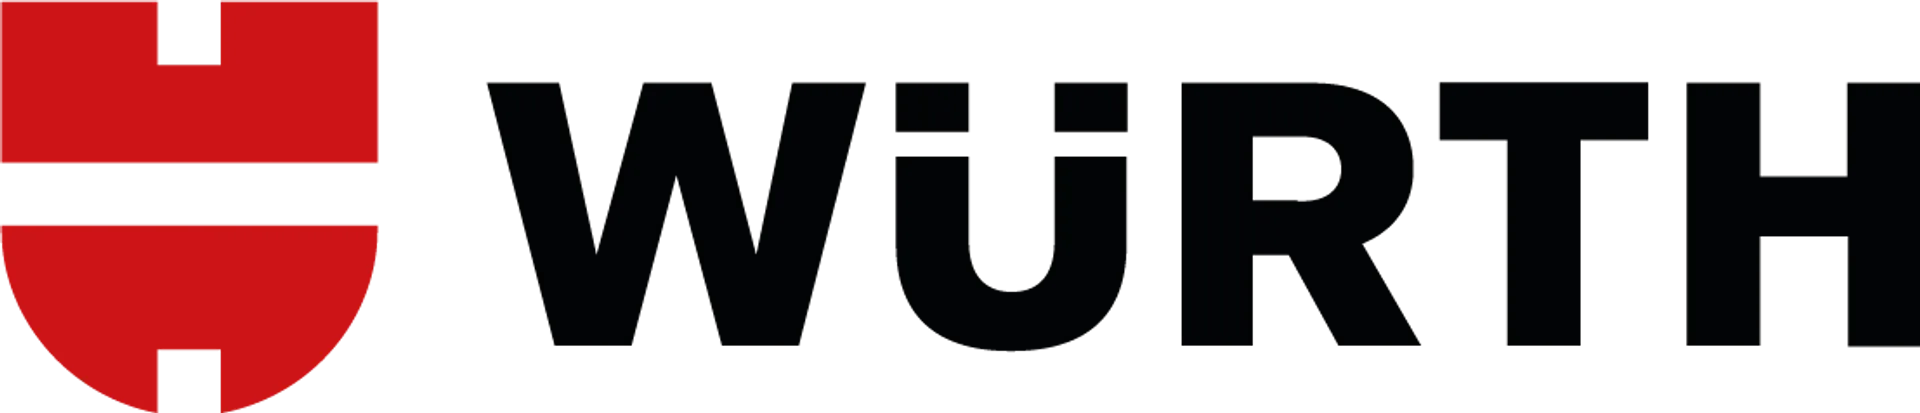 WÜRTH logo